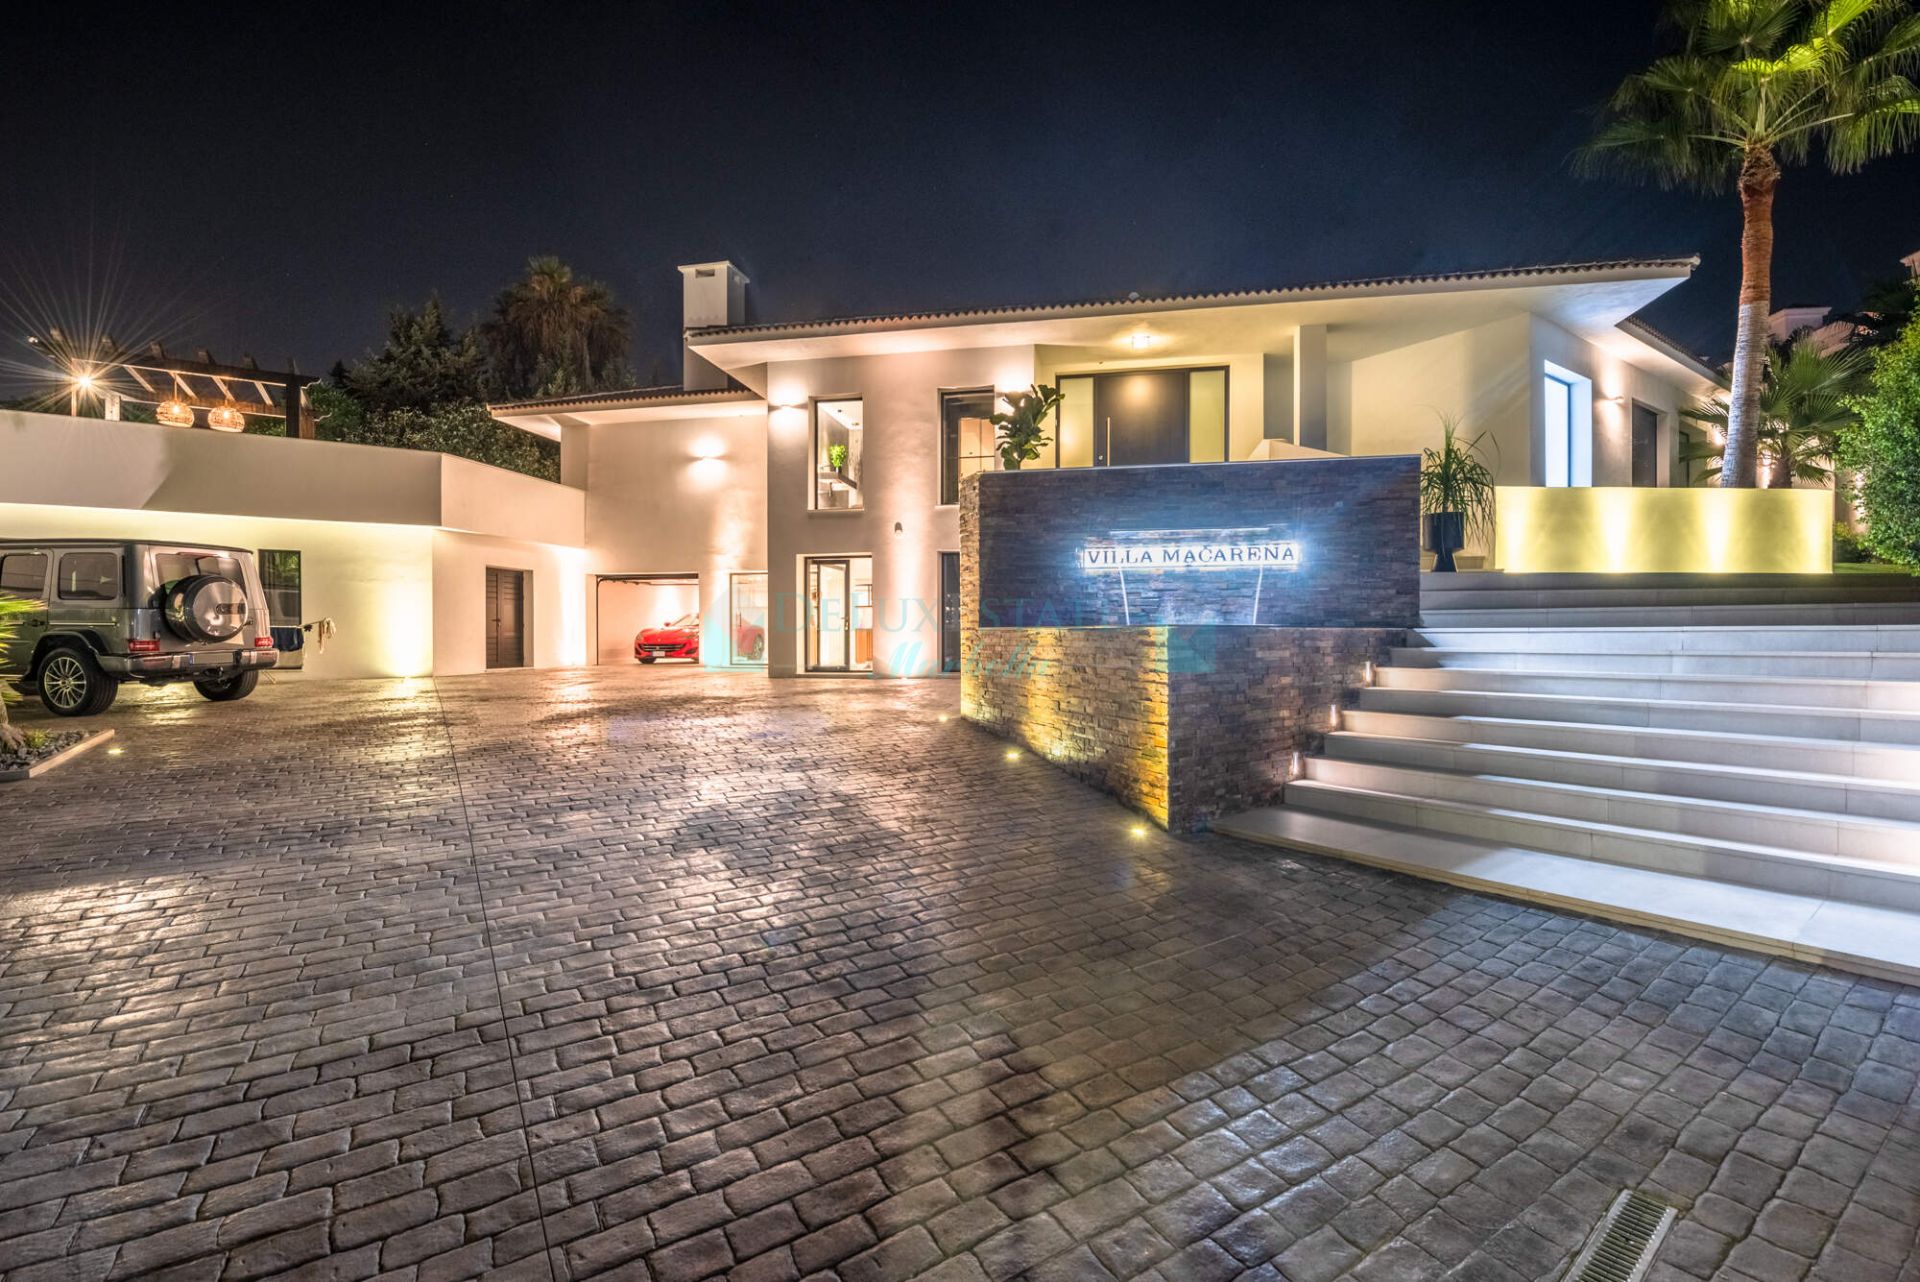 Photo Gallery - Luxury new villa next to Puerto Banus harbor